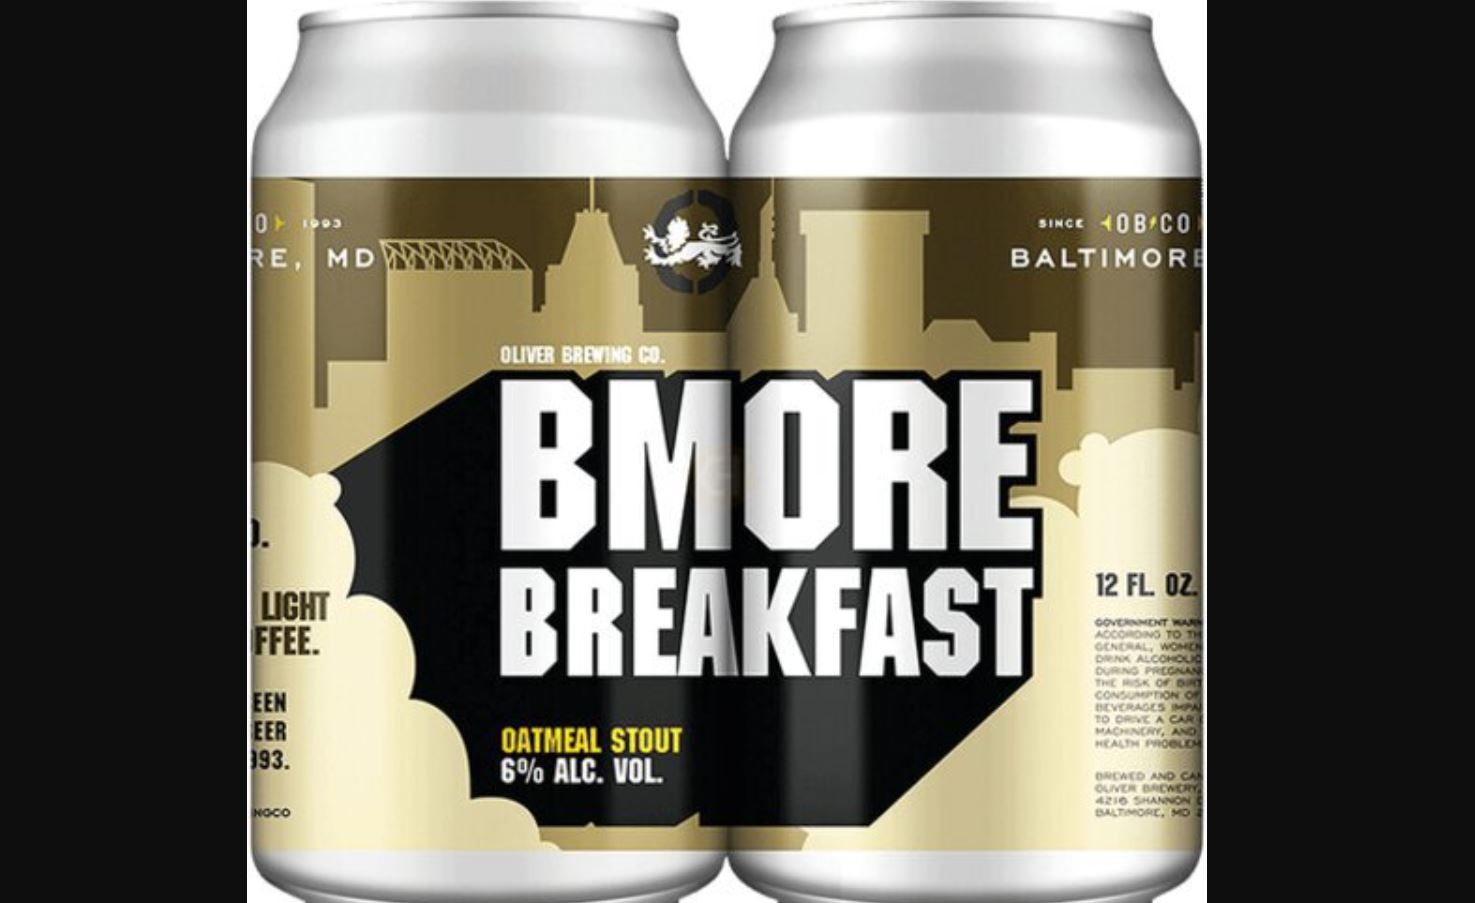 Oliver Bmore Breakfast Stout